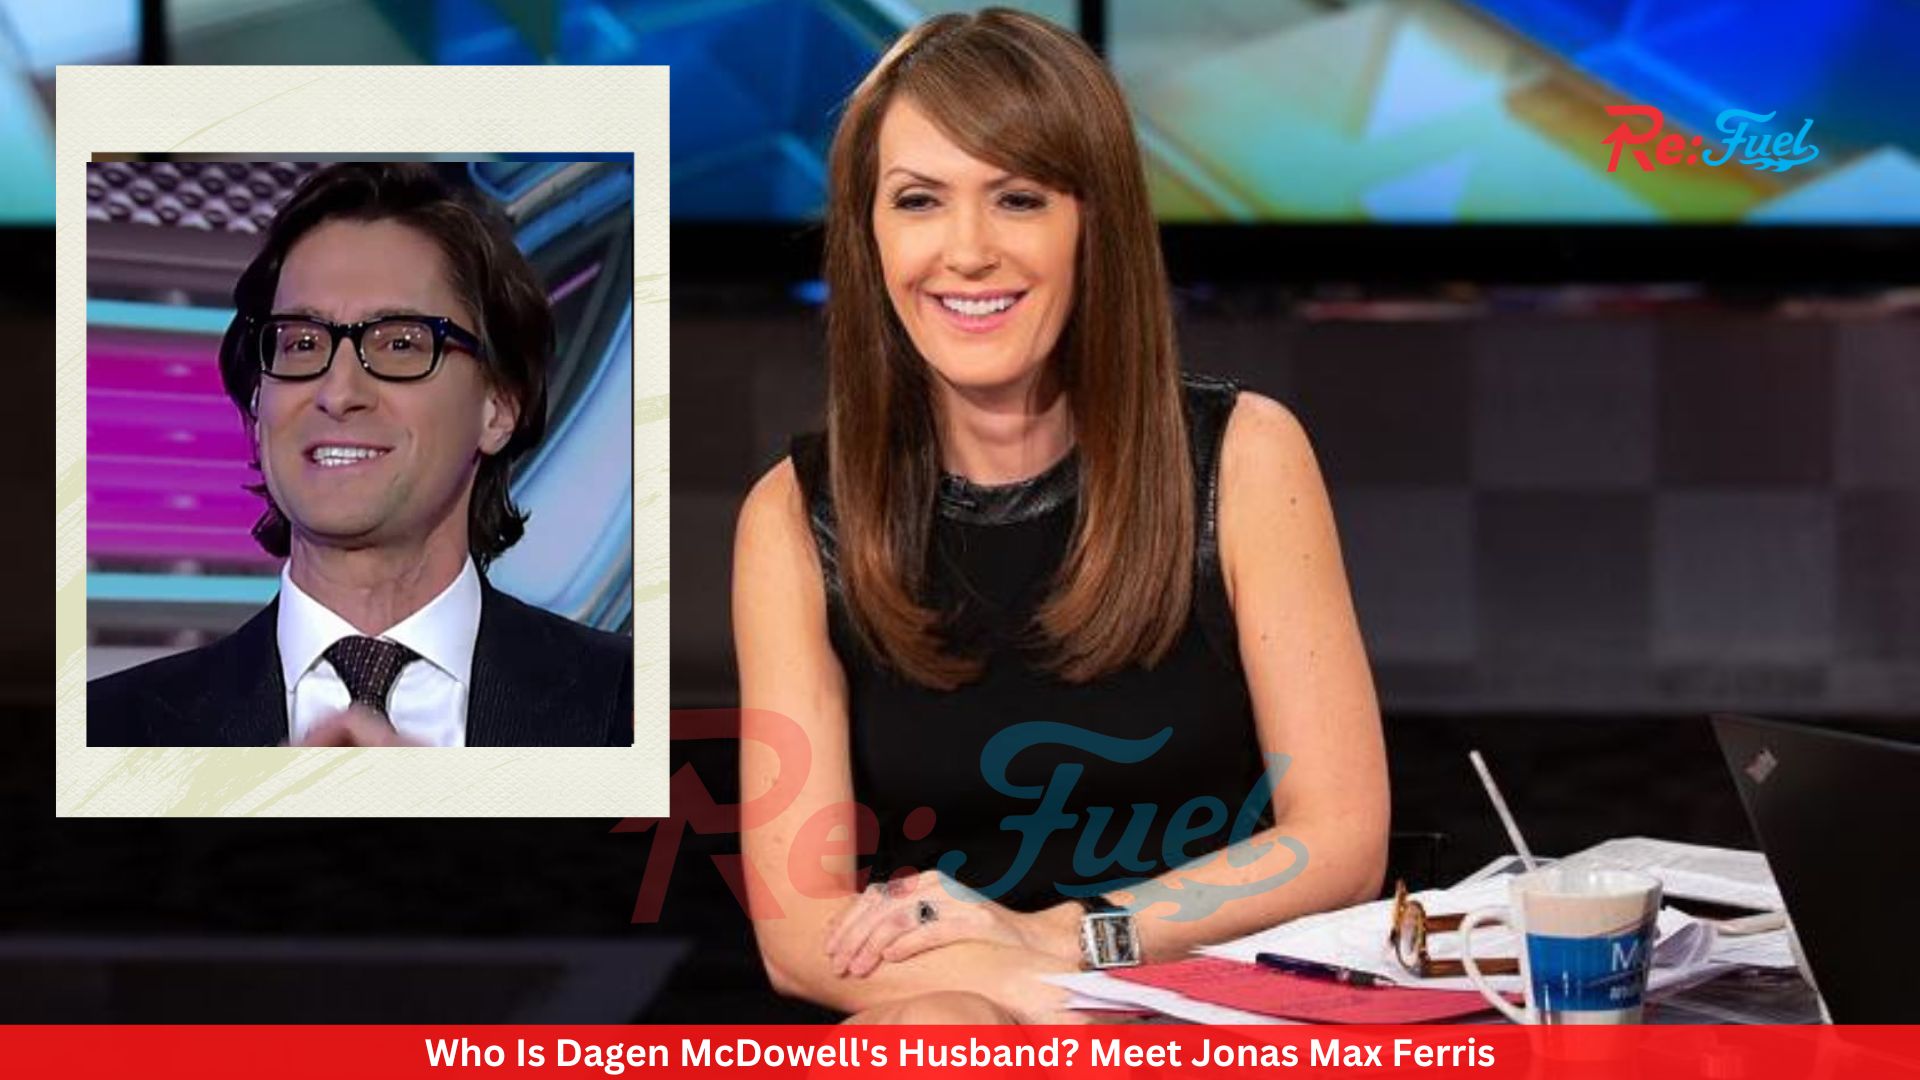 Who Is Dagen McDowell's Husband? Meet Jonas Max Ferris